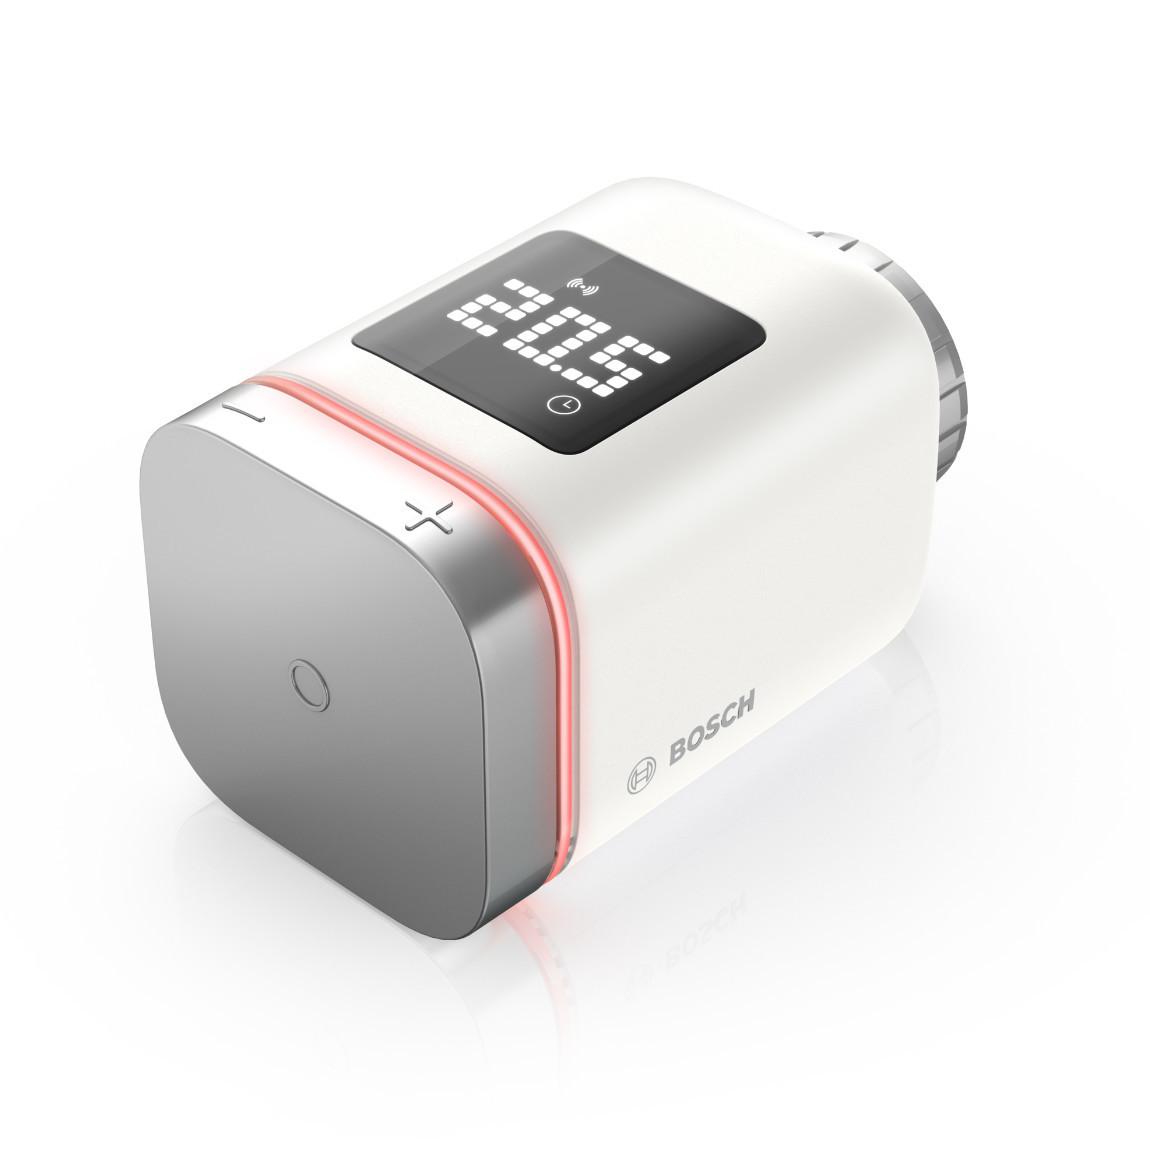 Bosch Smart Home Heizkörperthermostat II 4er-Set_einzeln schraeg rote LED